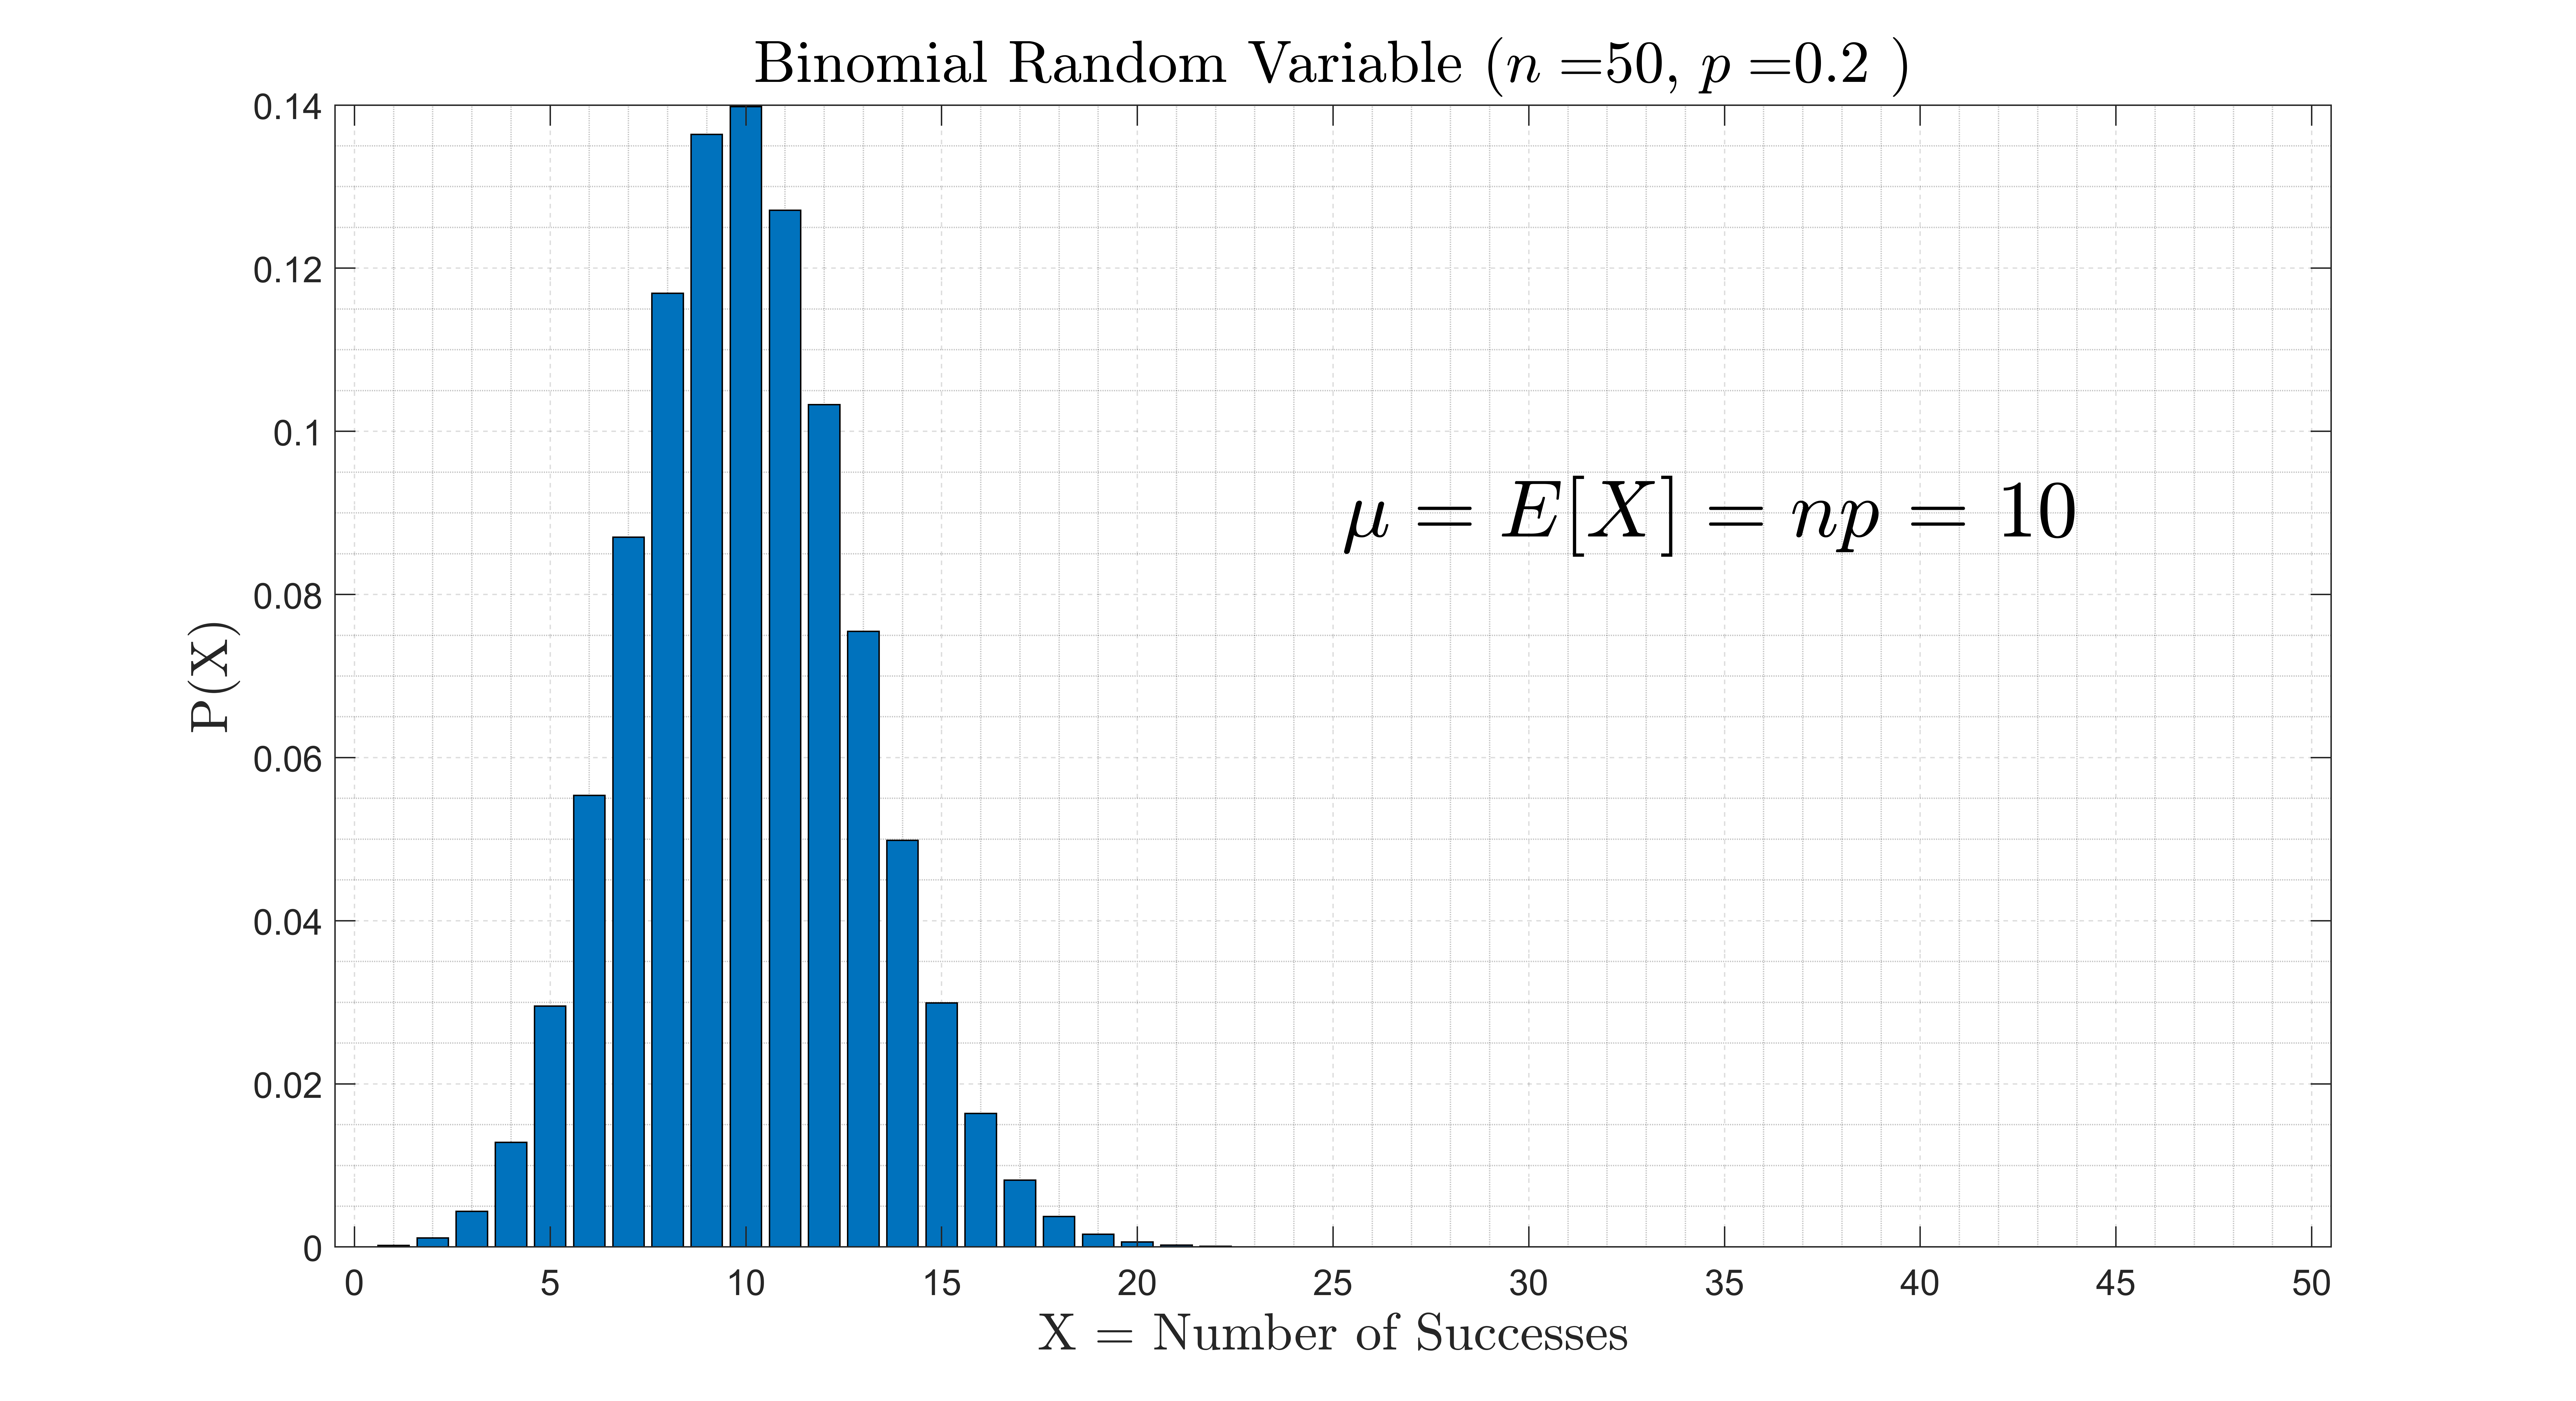 Plot of a Binomial Distribution